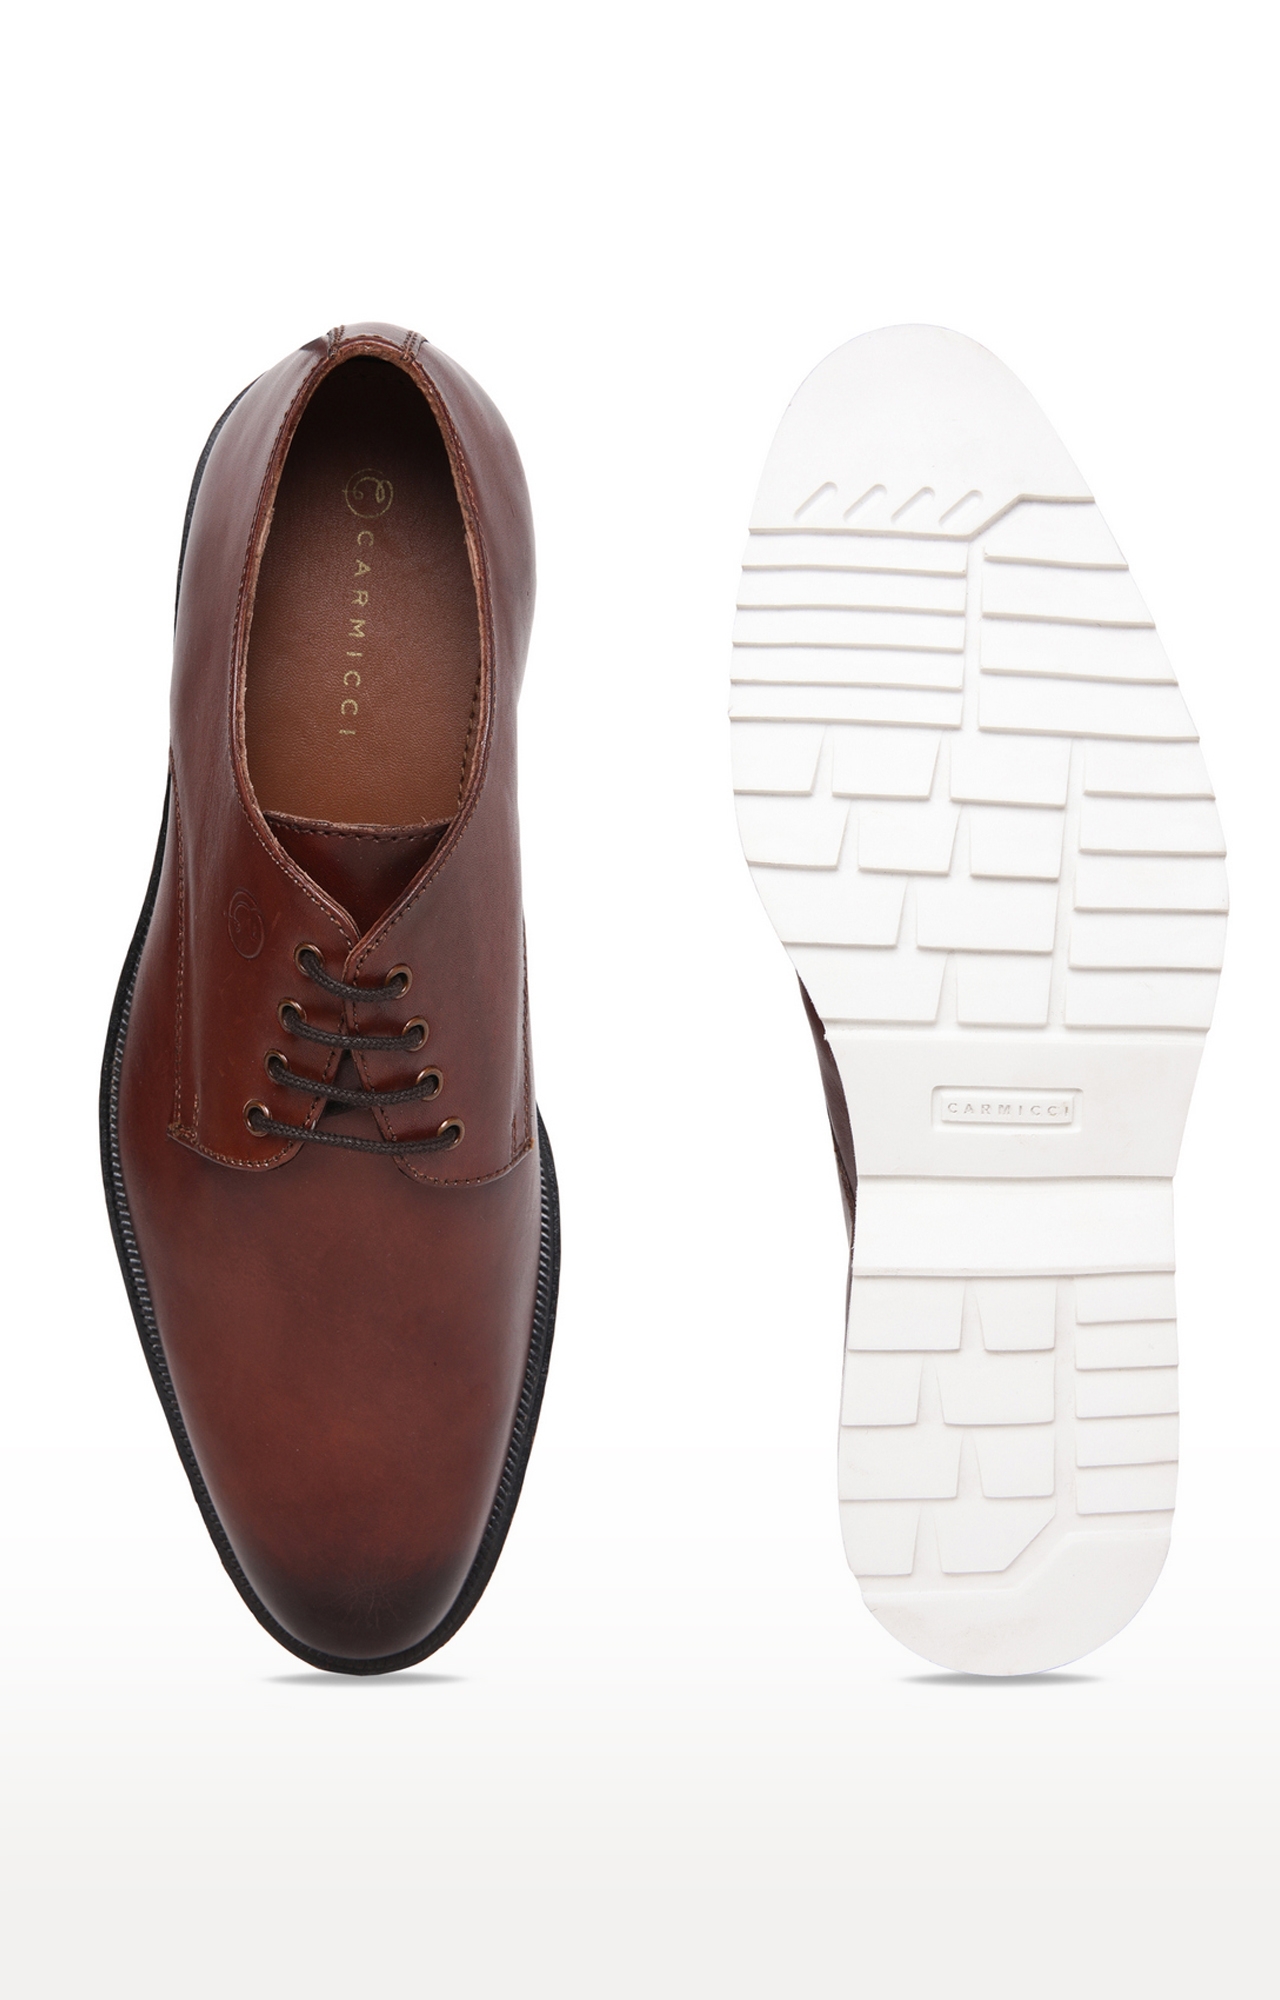 Carmicci | Carmicci Dark Tan Lifestyle Breathable Casual Shoes For Men 5